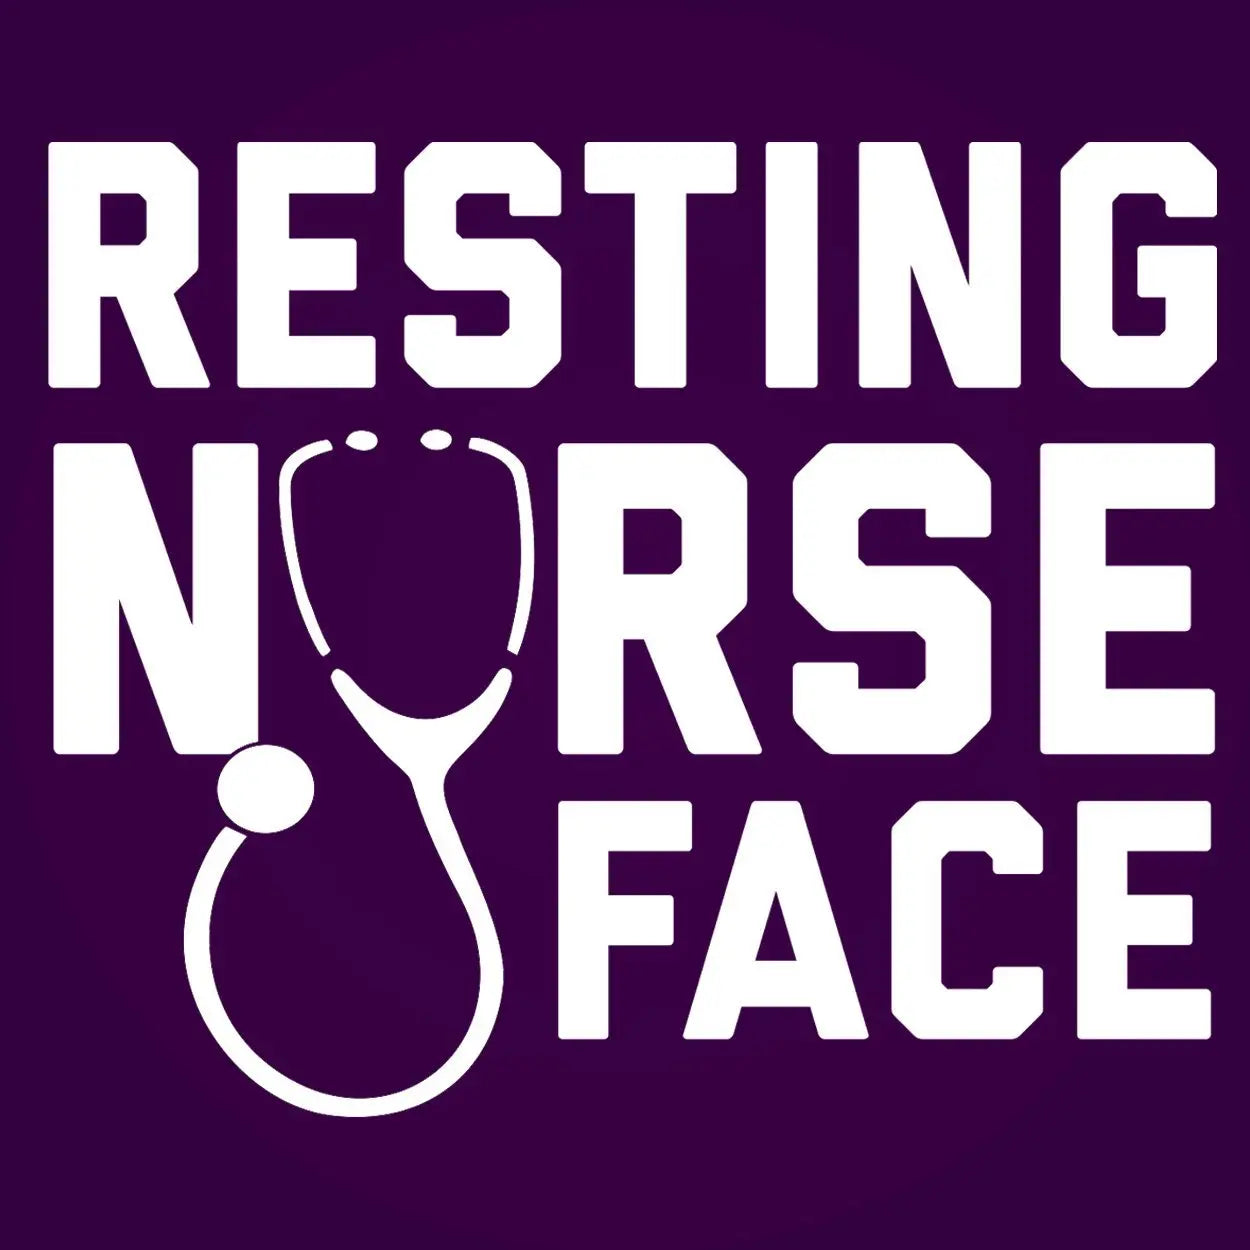 Resting Nurse Face Tshirt - Donkey Tees